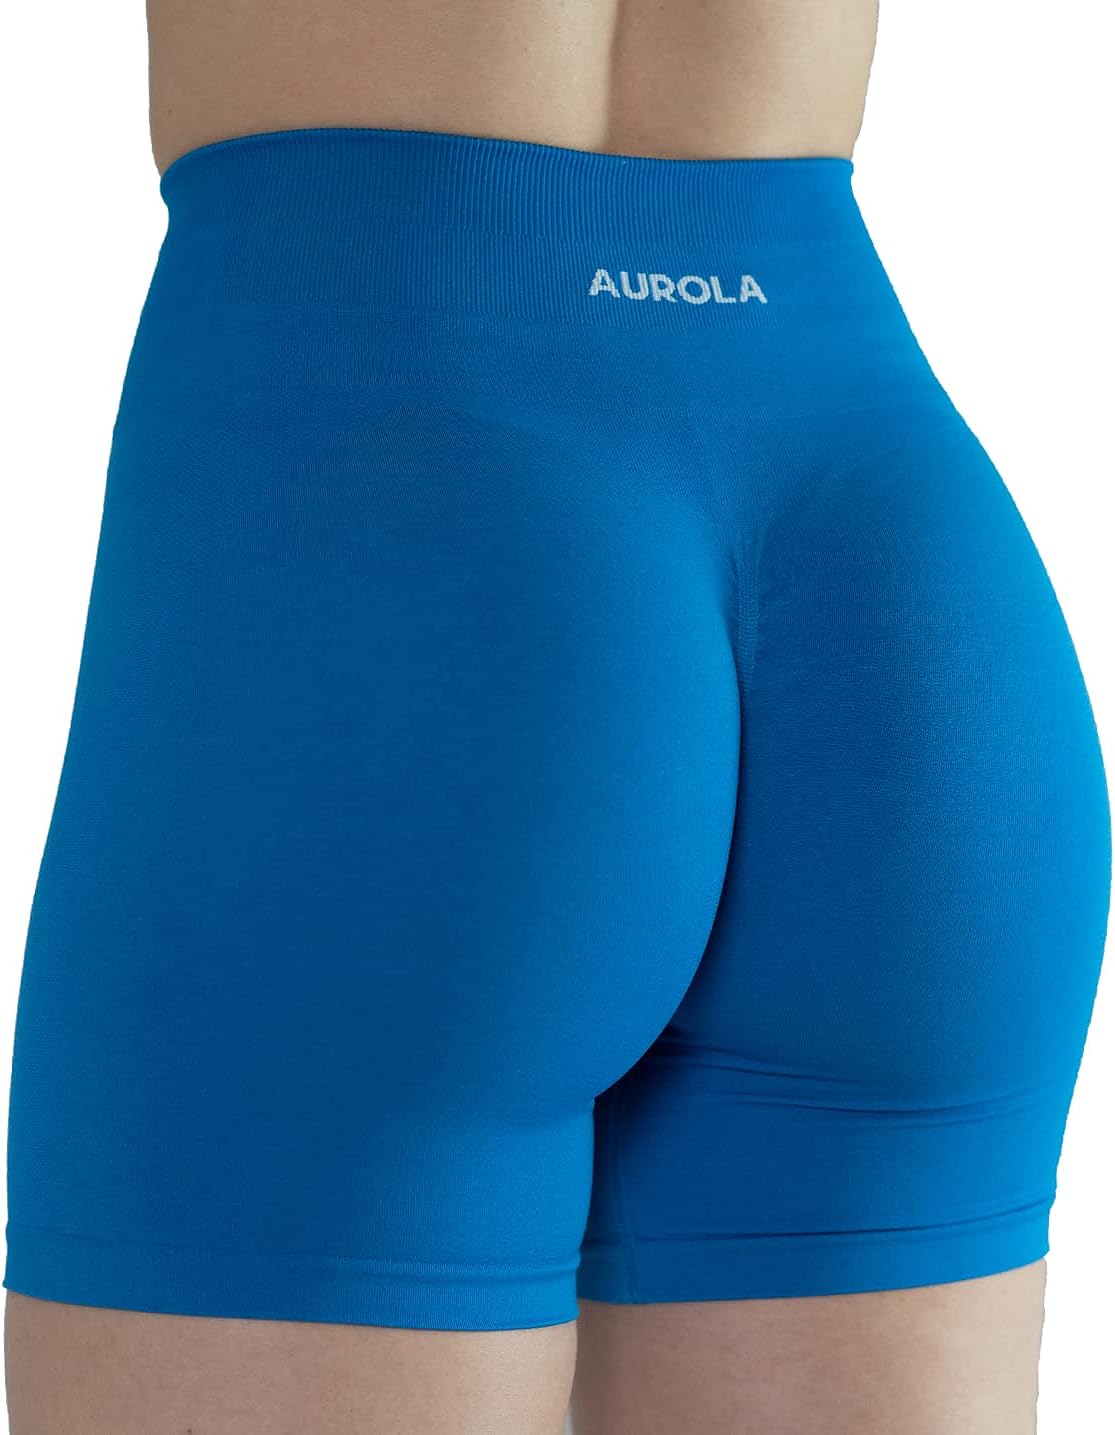 AUROLA Intensify Workout Shorts for Women Seamless Scrunch Short Gym Yoga Running Sport Active Exercise Fitness Shorts Black